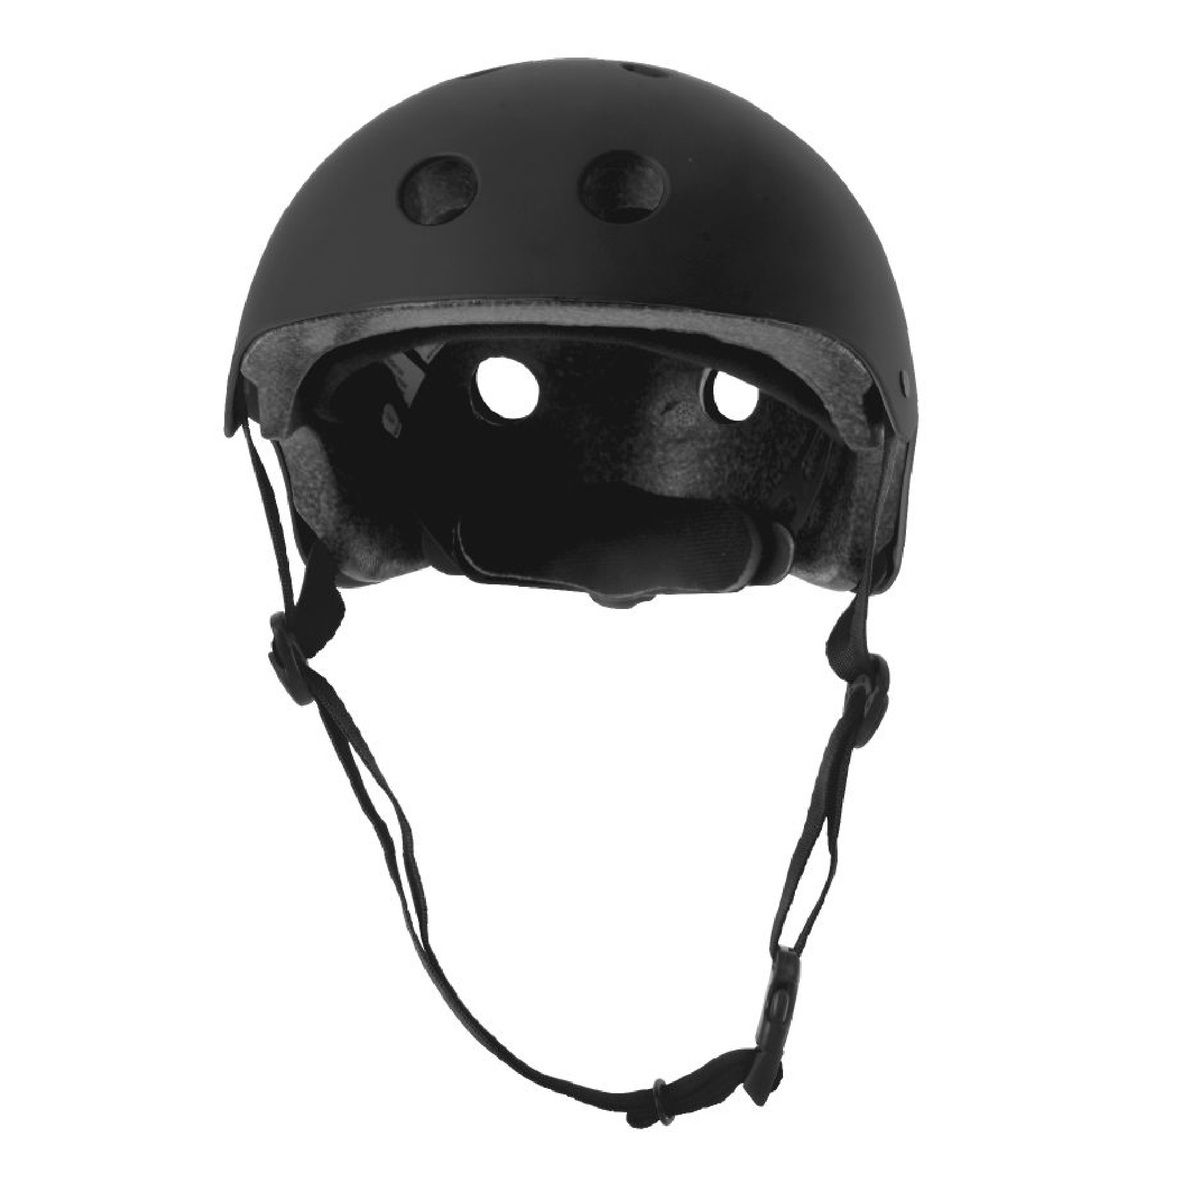 Smart Trike Helmet, Black, M, 4001410